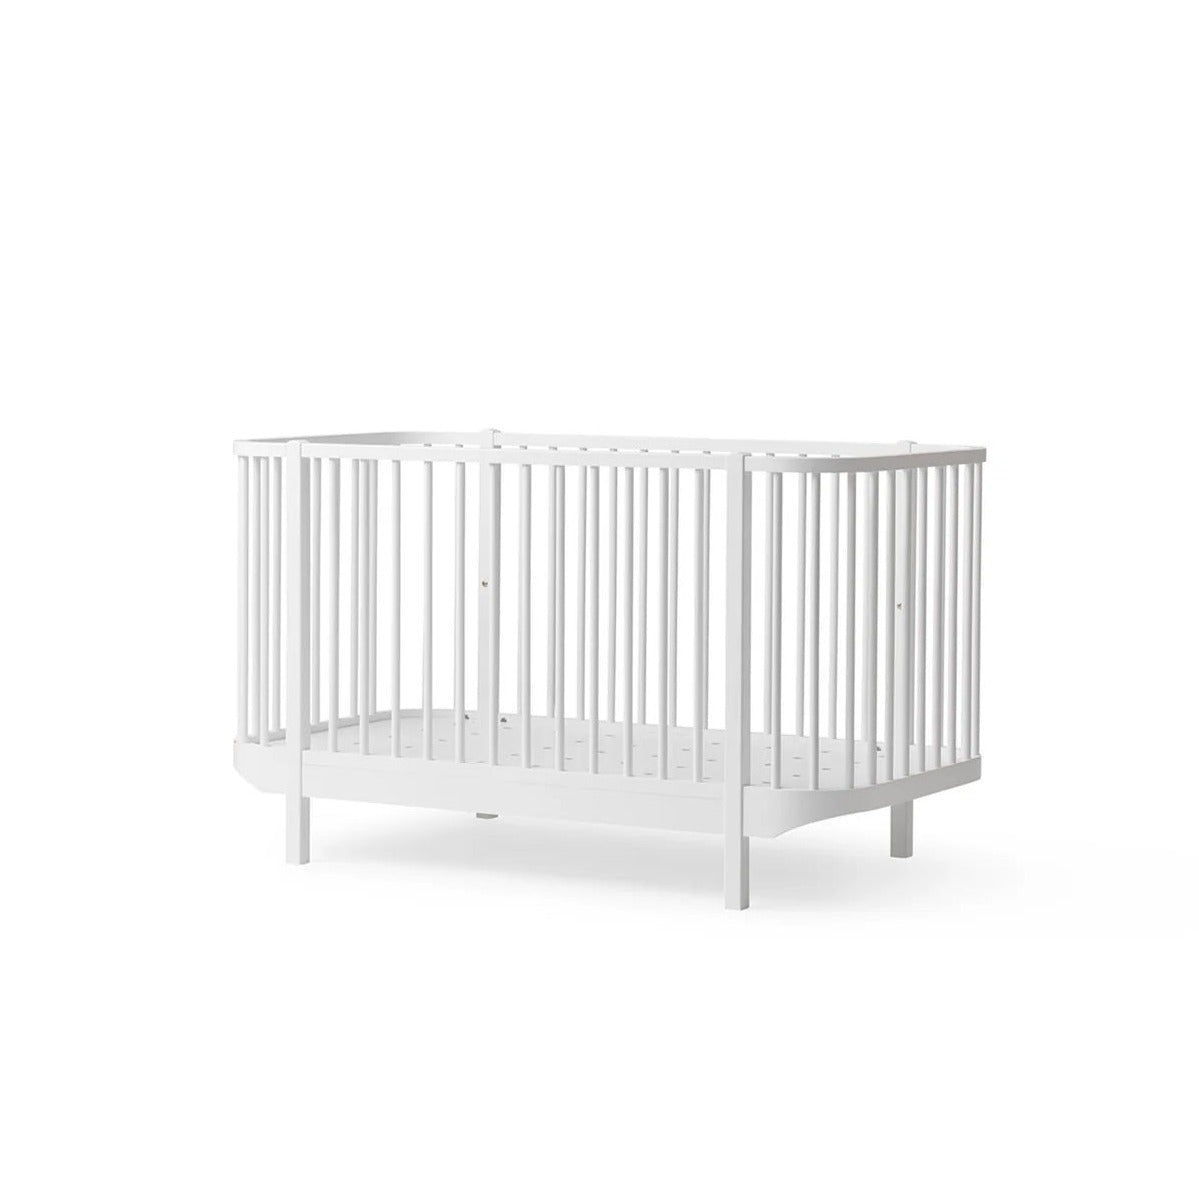 Oliver Furniture Wood Cot - White